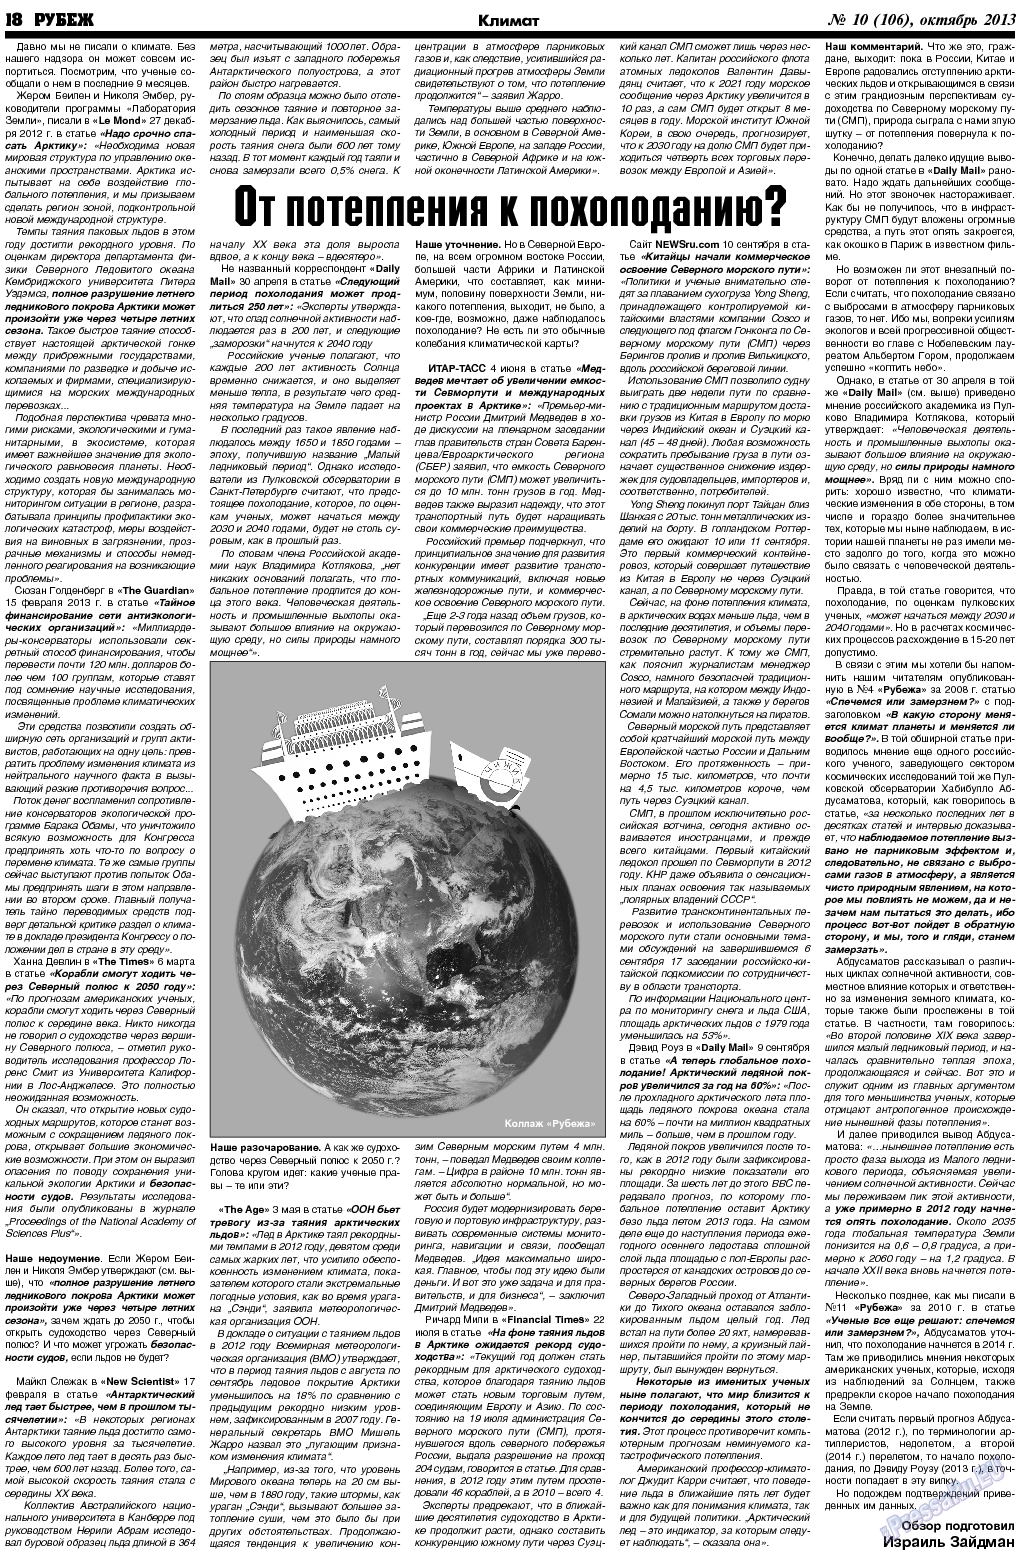 Рубеж, газета. 2013 №10 стр.18